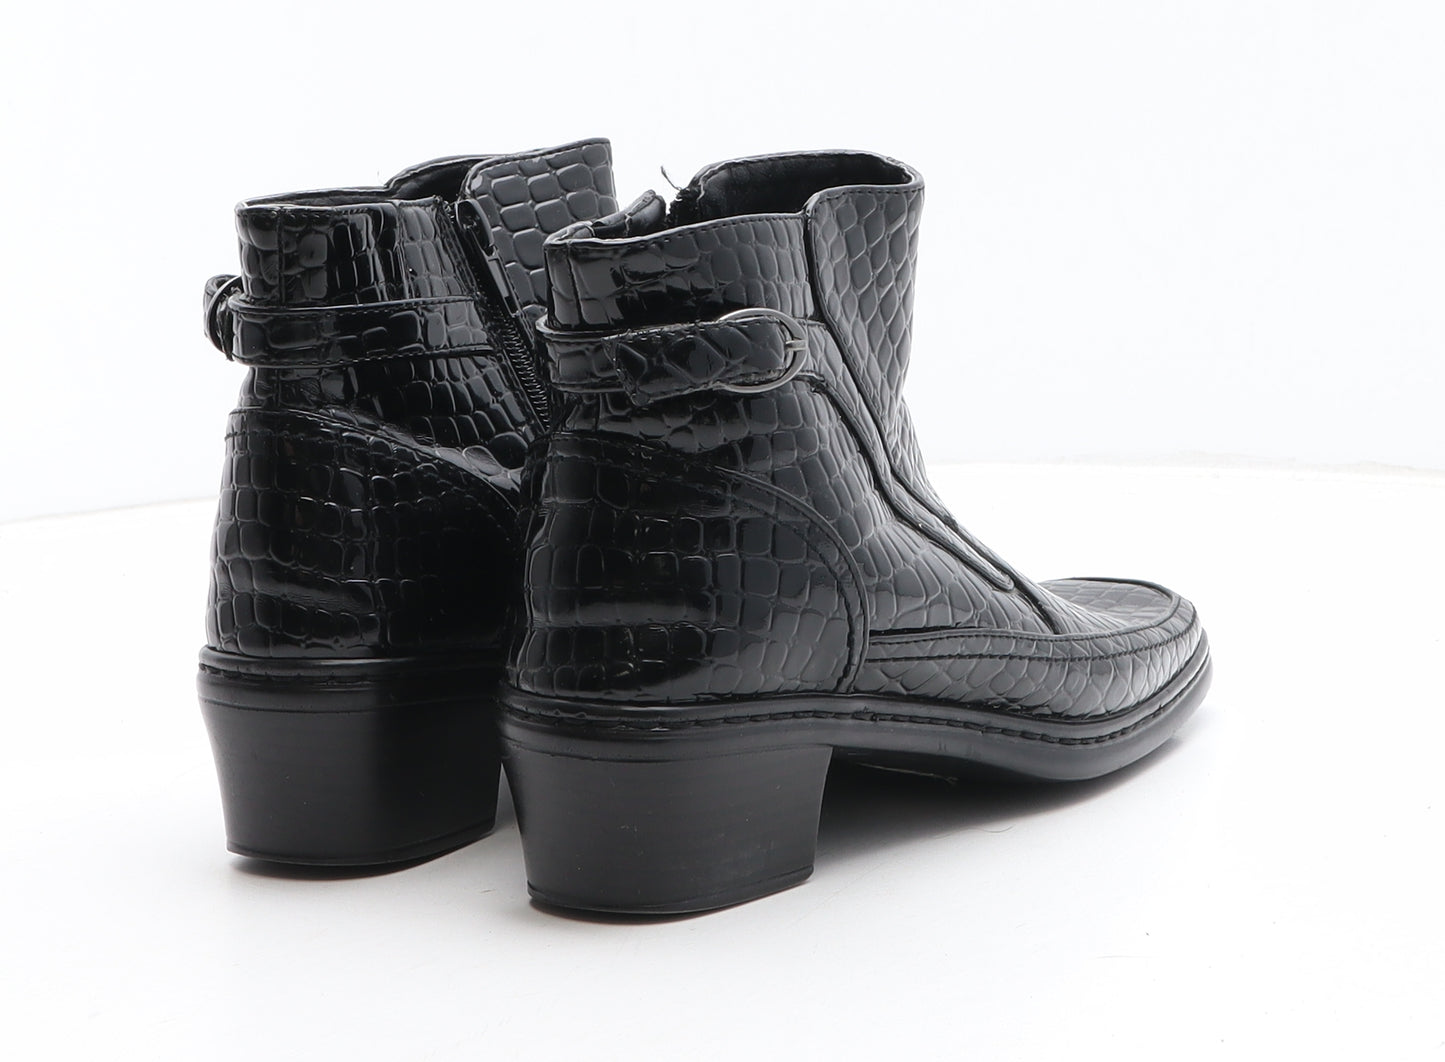 Damart Womens Black Animal Print Synthetic Bootie Boot UK - Croc Texture